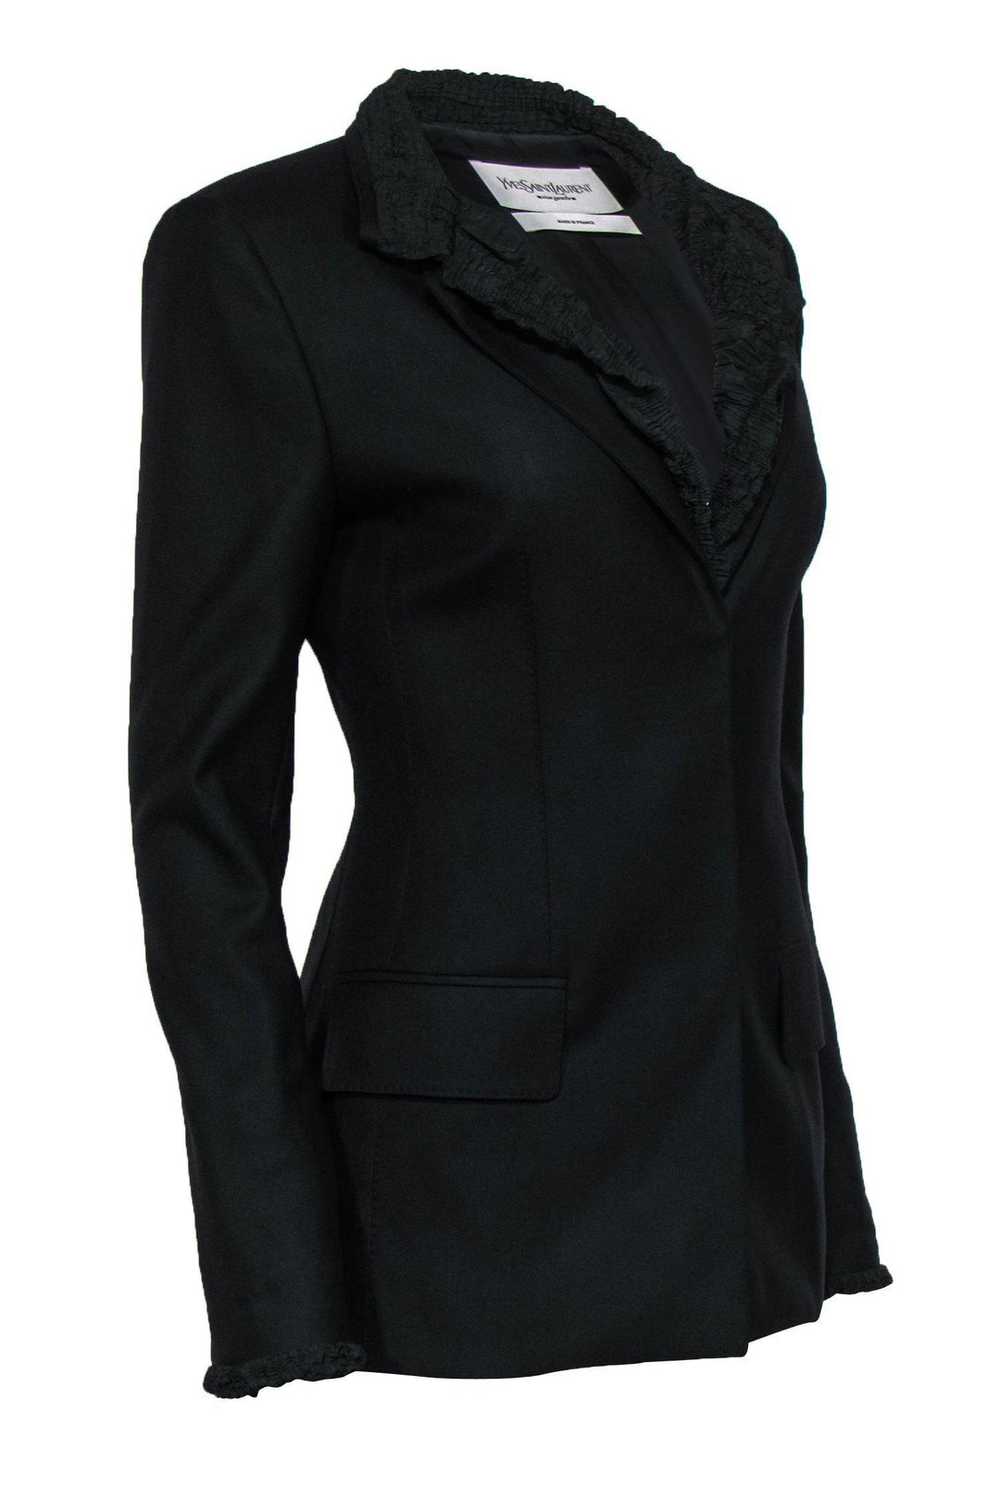 Yves Saint Laurent - Black Crinkled Ruched Wool J… - image 2